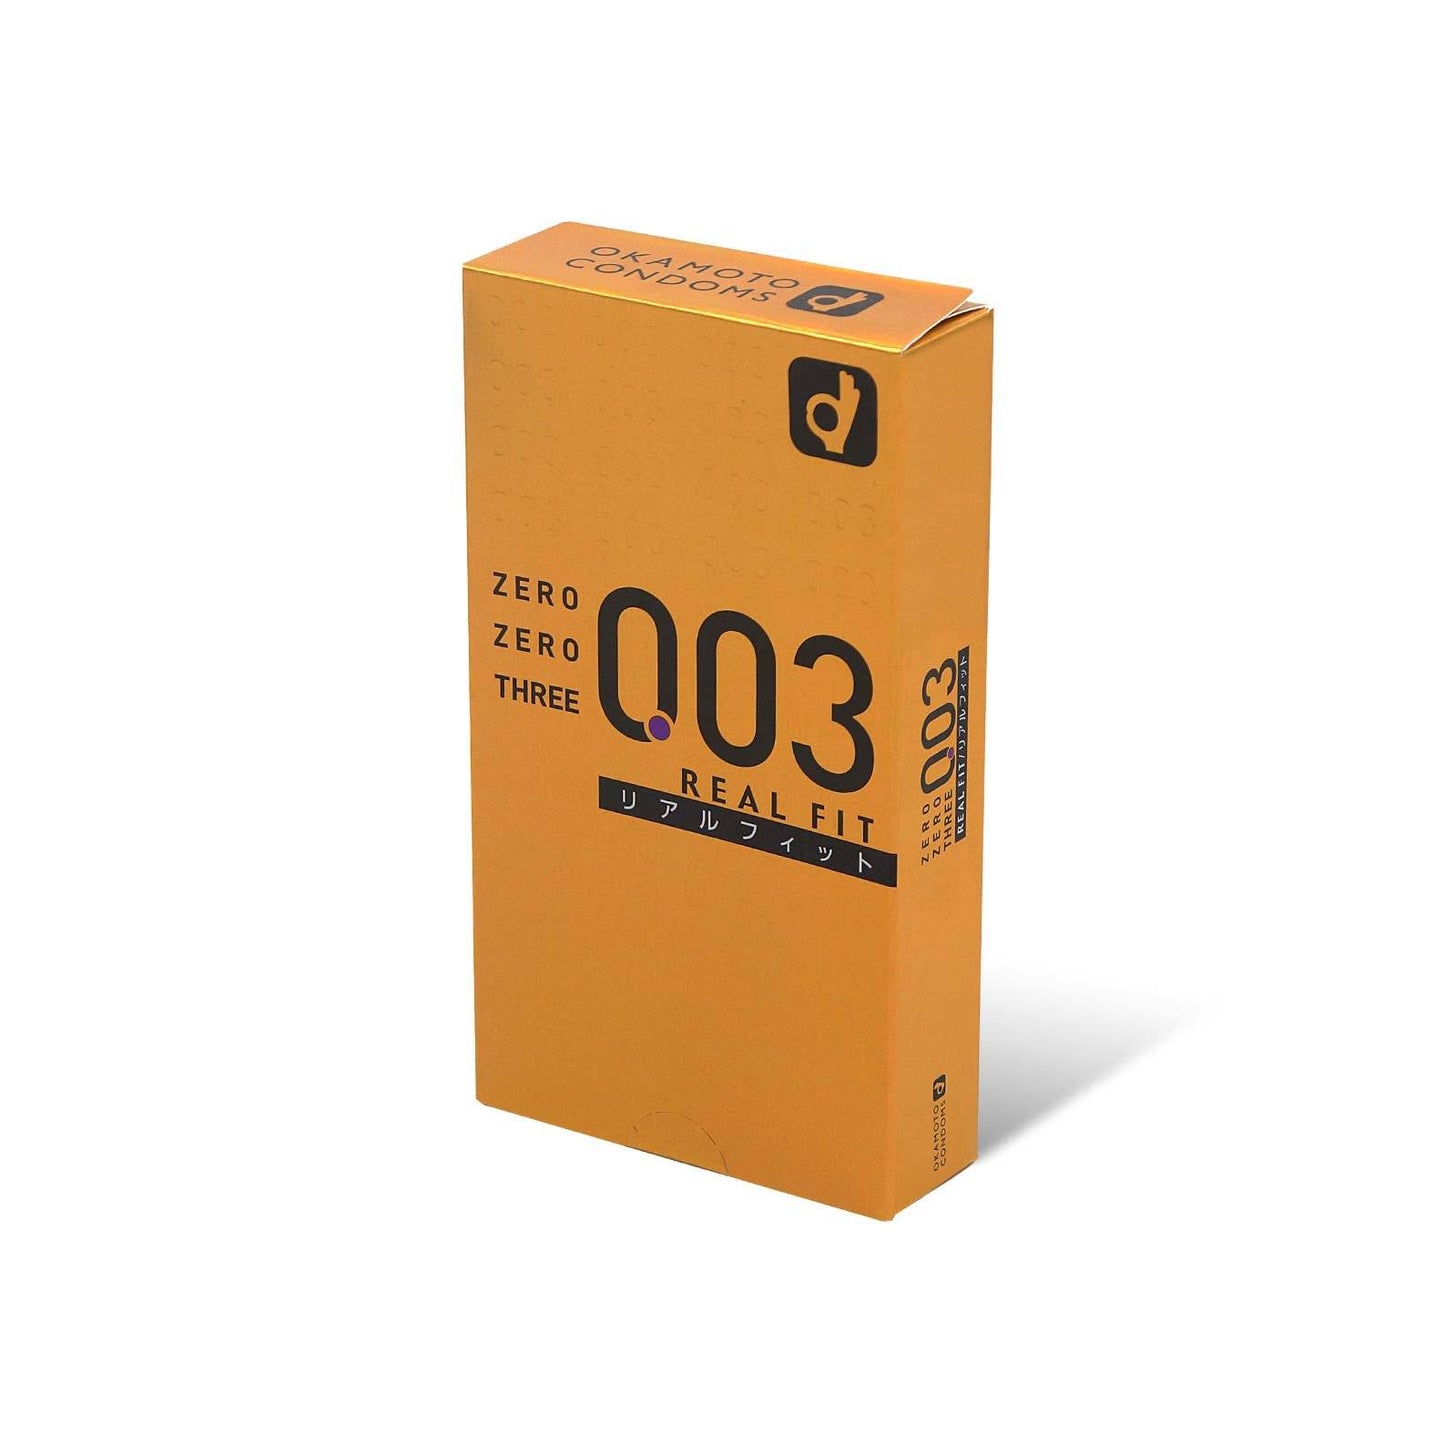 OKAMOTO 0.03 真貼身 日本版 乳膠安全套 10 片裝 安全套 購買